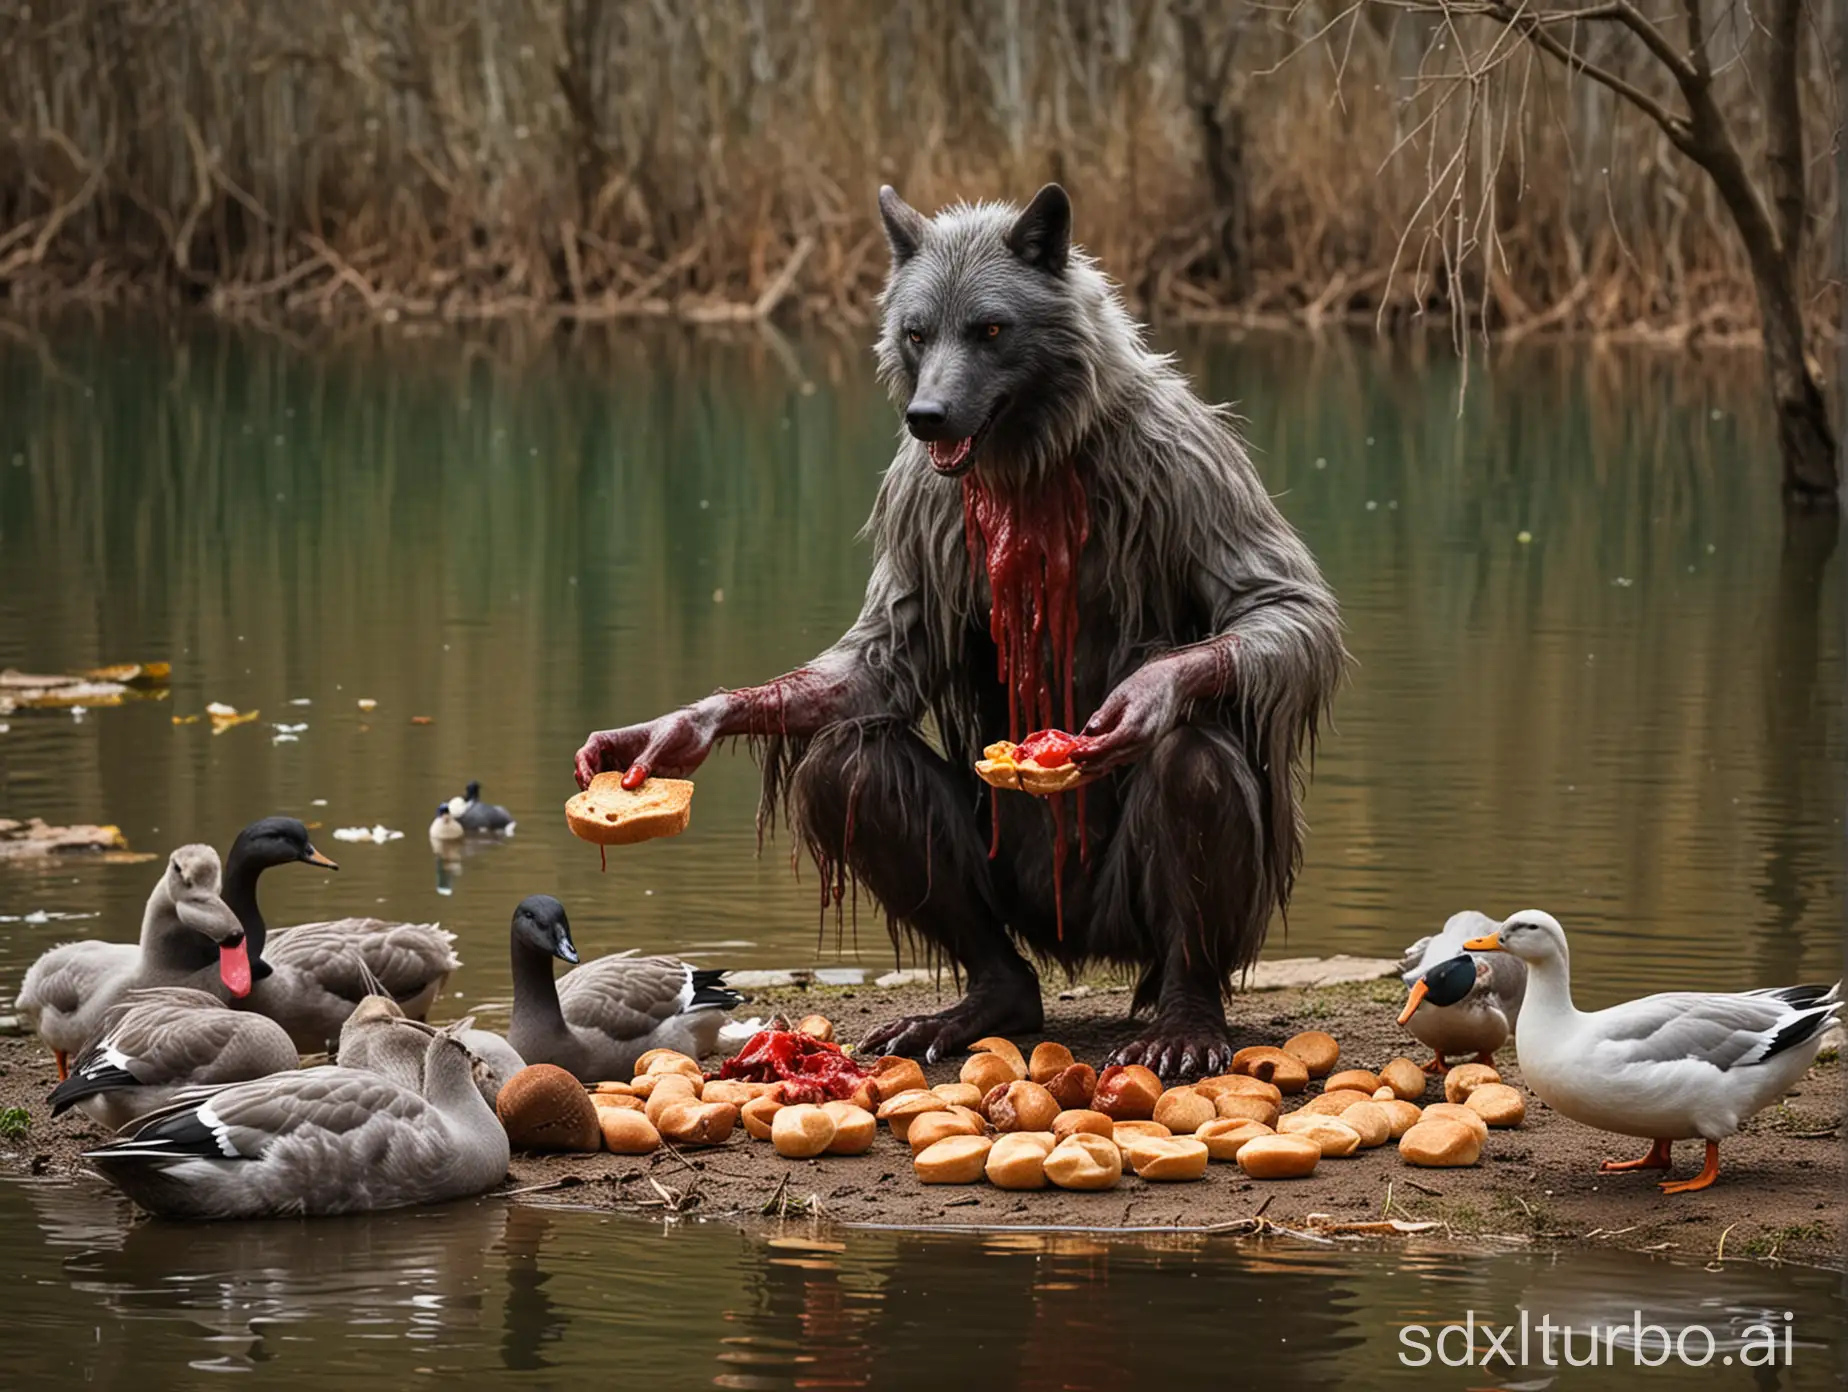 Werewolf-Feeding-Ducks-with-Bread-in-Bloodthirsty-Scene